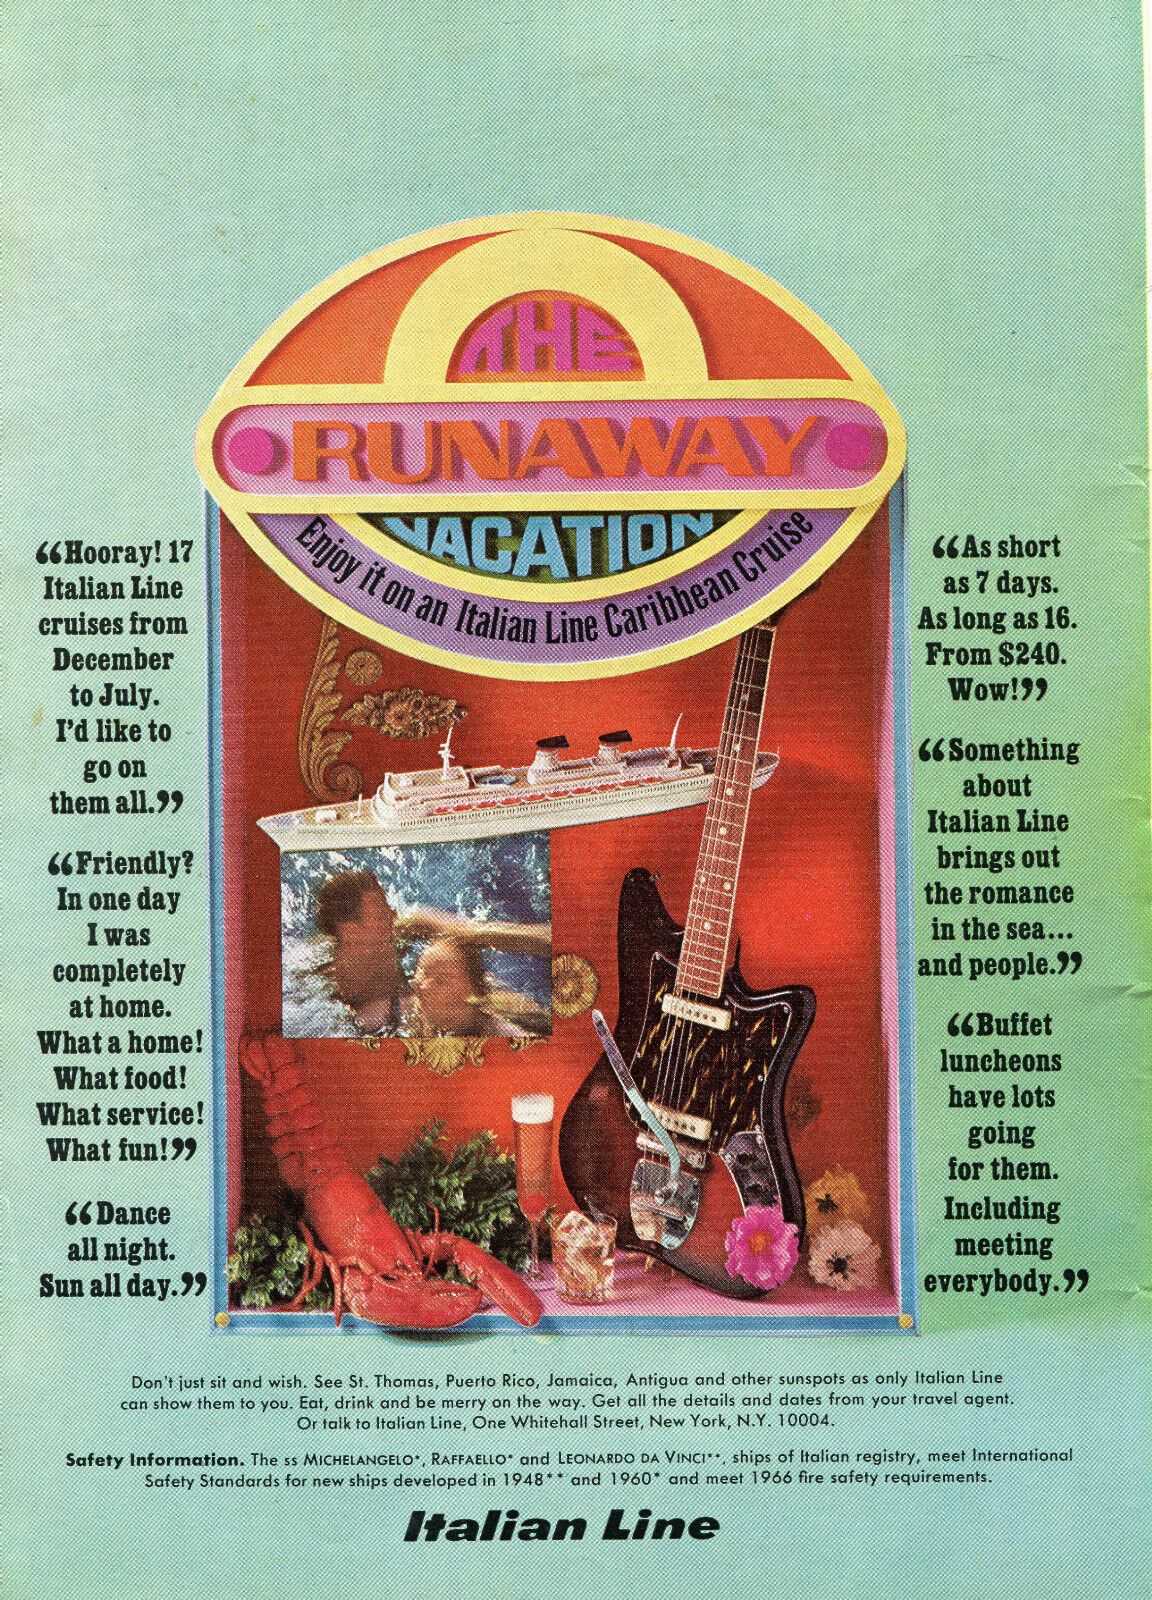 1969 Italian Cline The Runaway Vacation Caribbean Cruise Print Ad